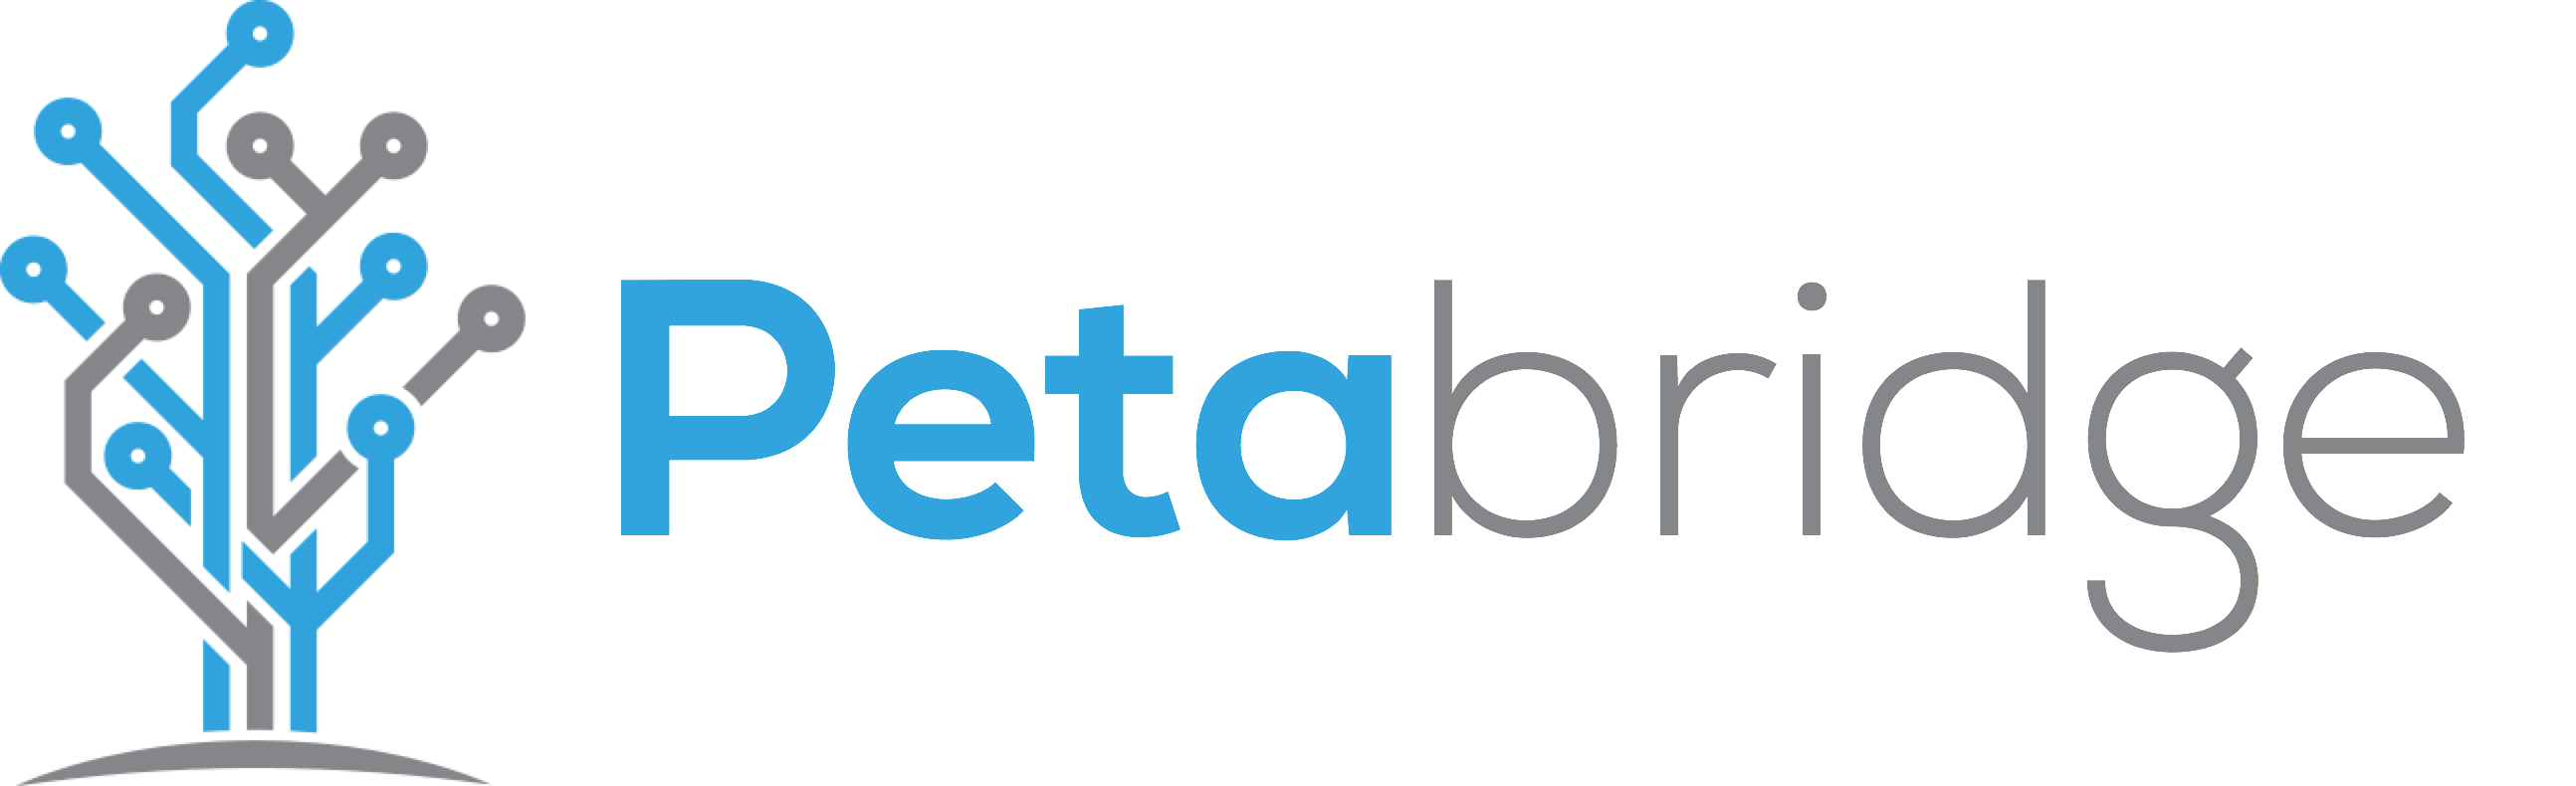 Petabridge, the Akka.NET Company.